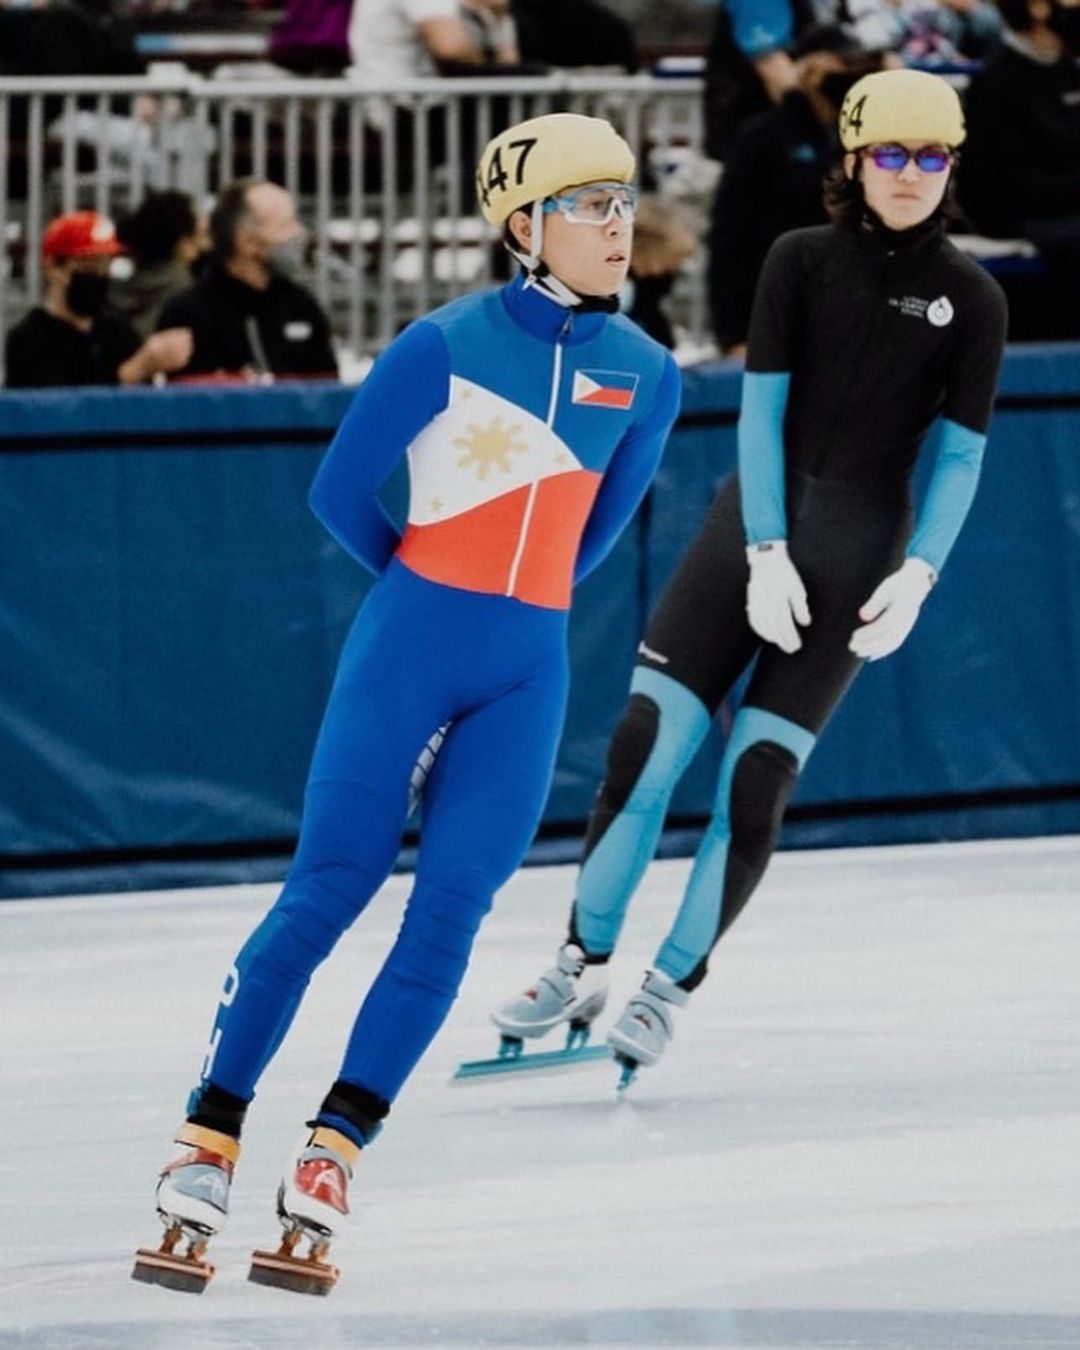 Teen skater Julian Macaraeg aims for maiden Winter Olympics berth